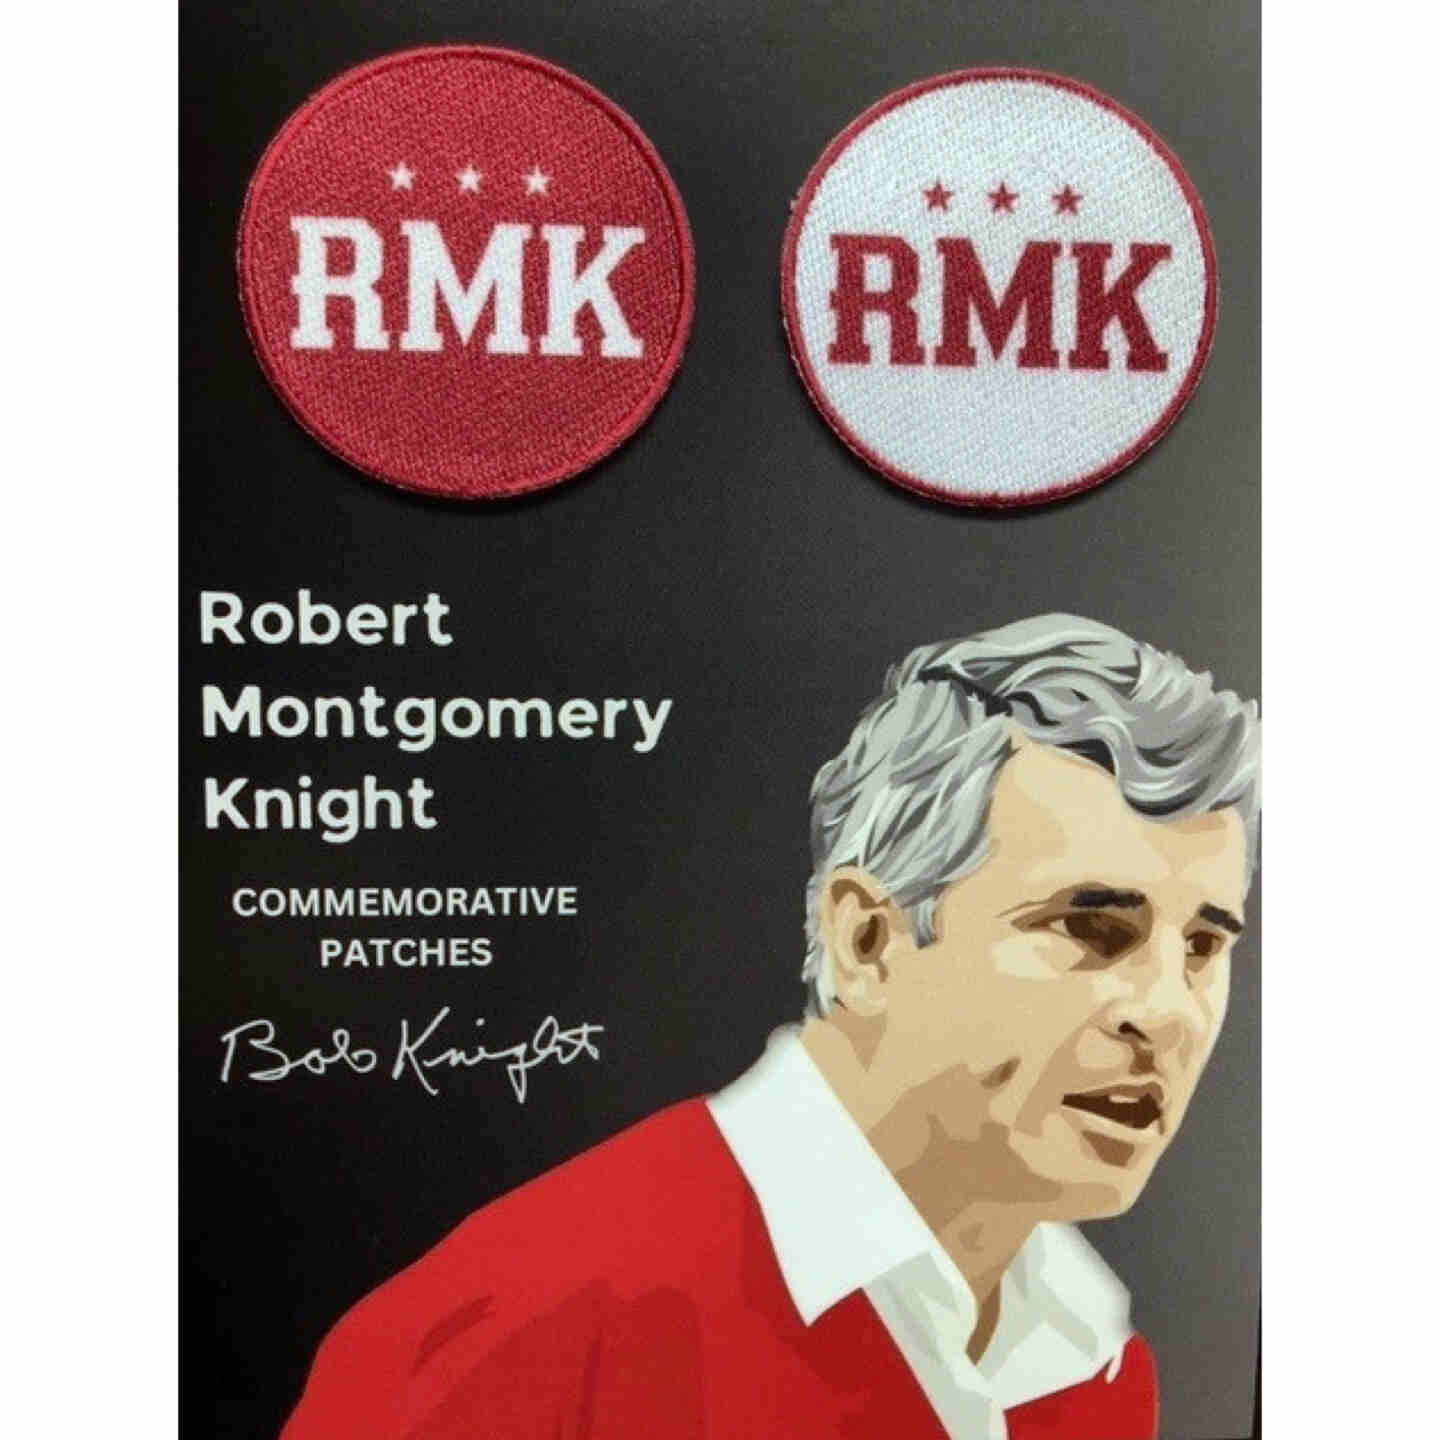 Bob Knight "RMK" Commemorative Patches - Set of 2 Image 1